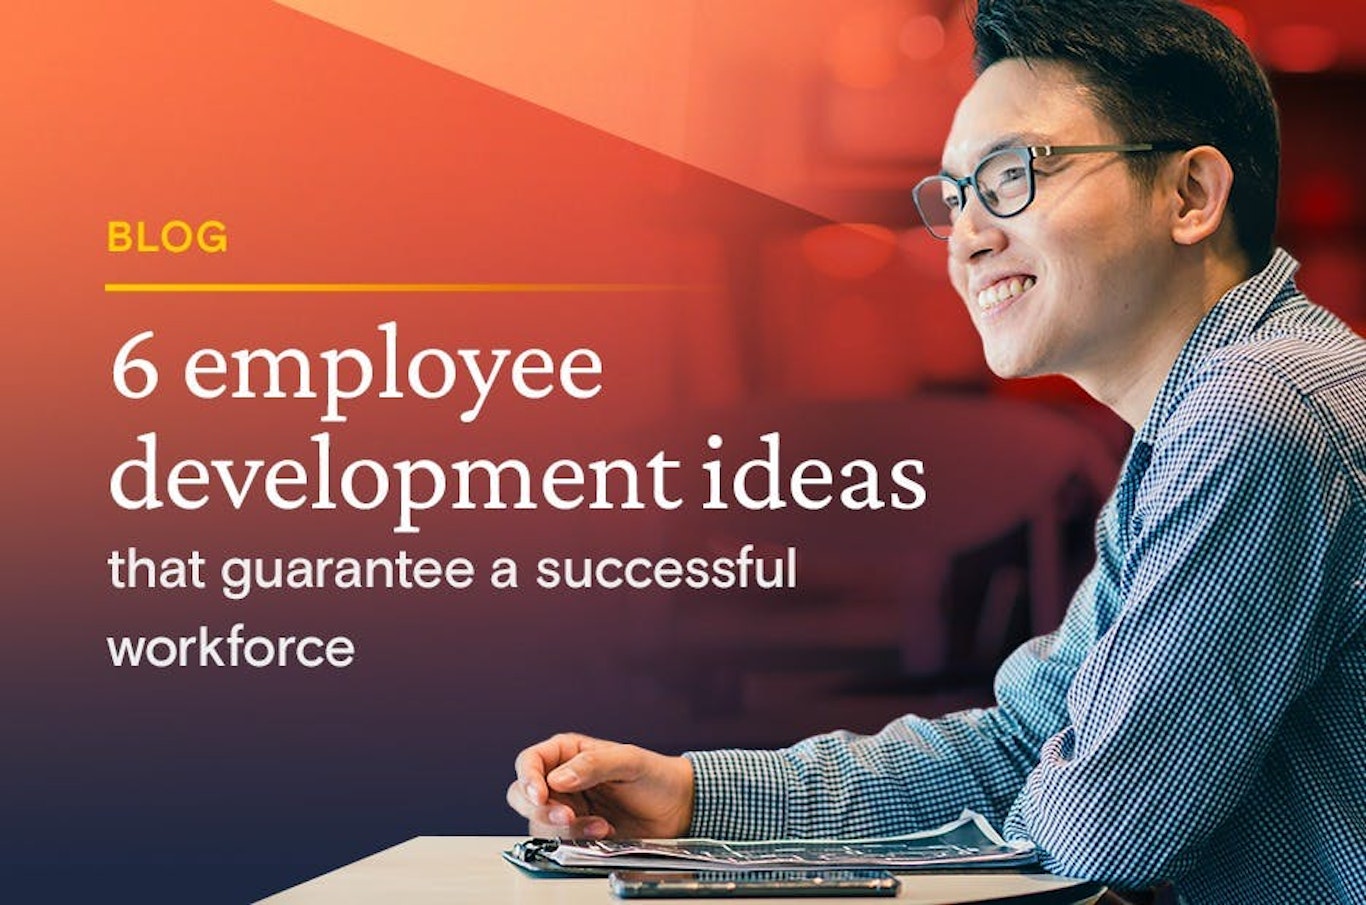 employee development ideas blog header image